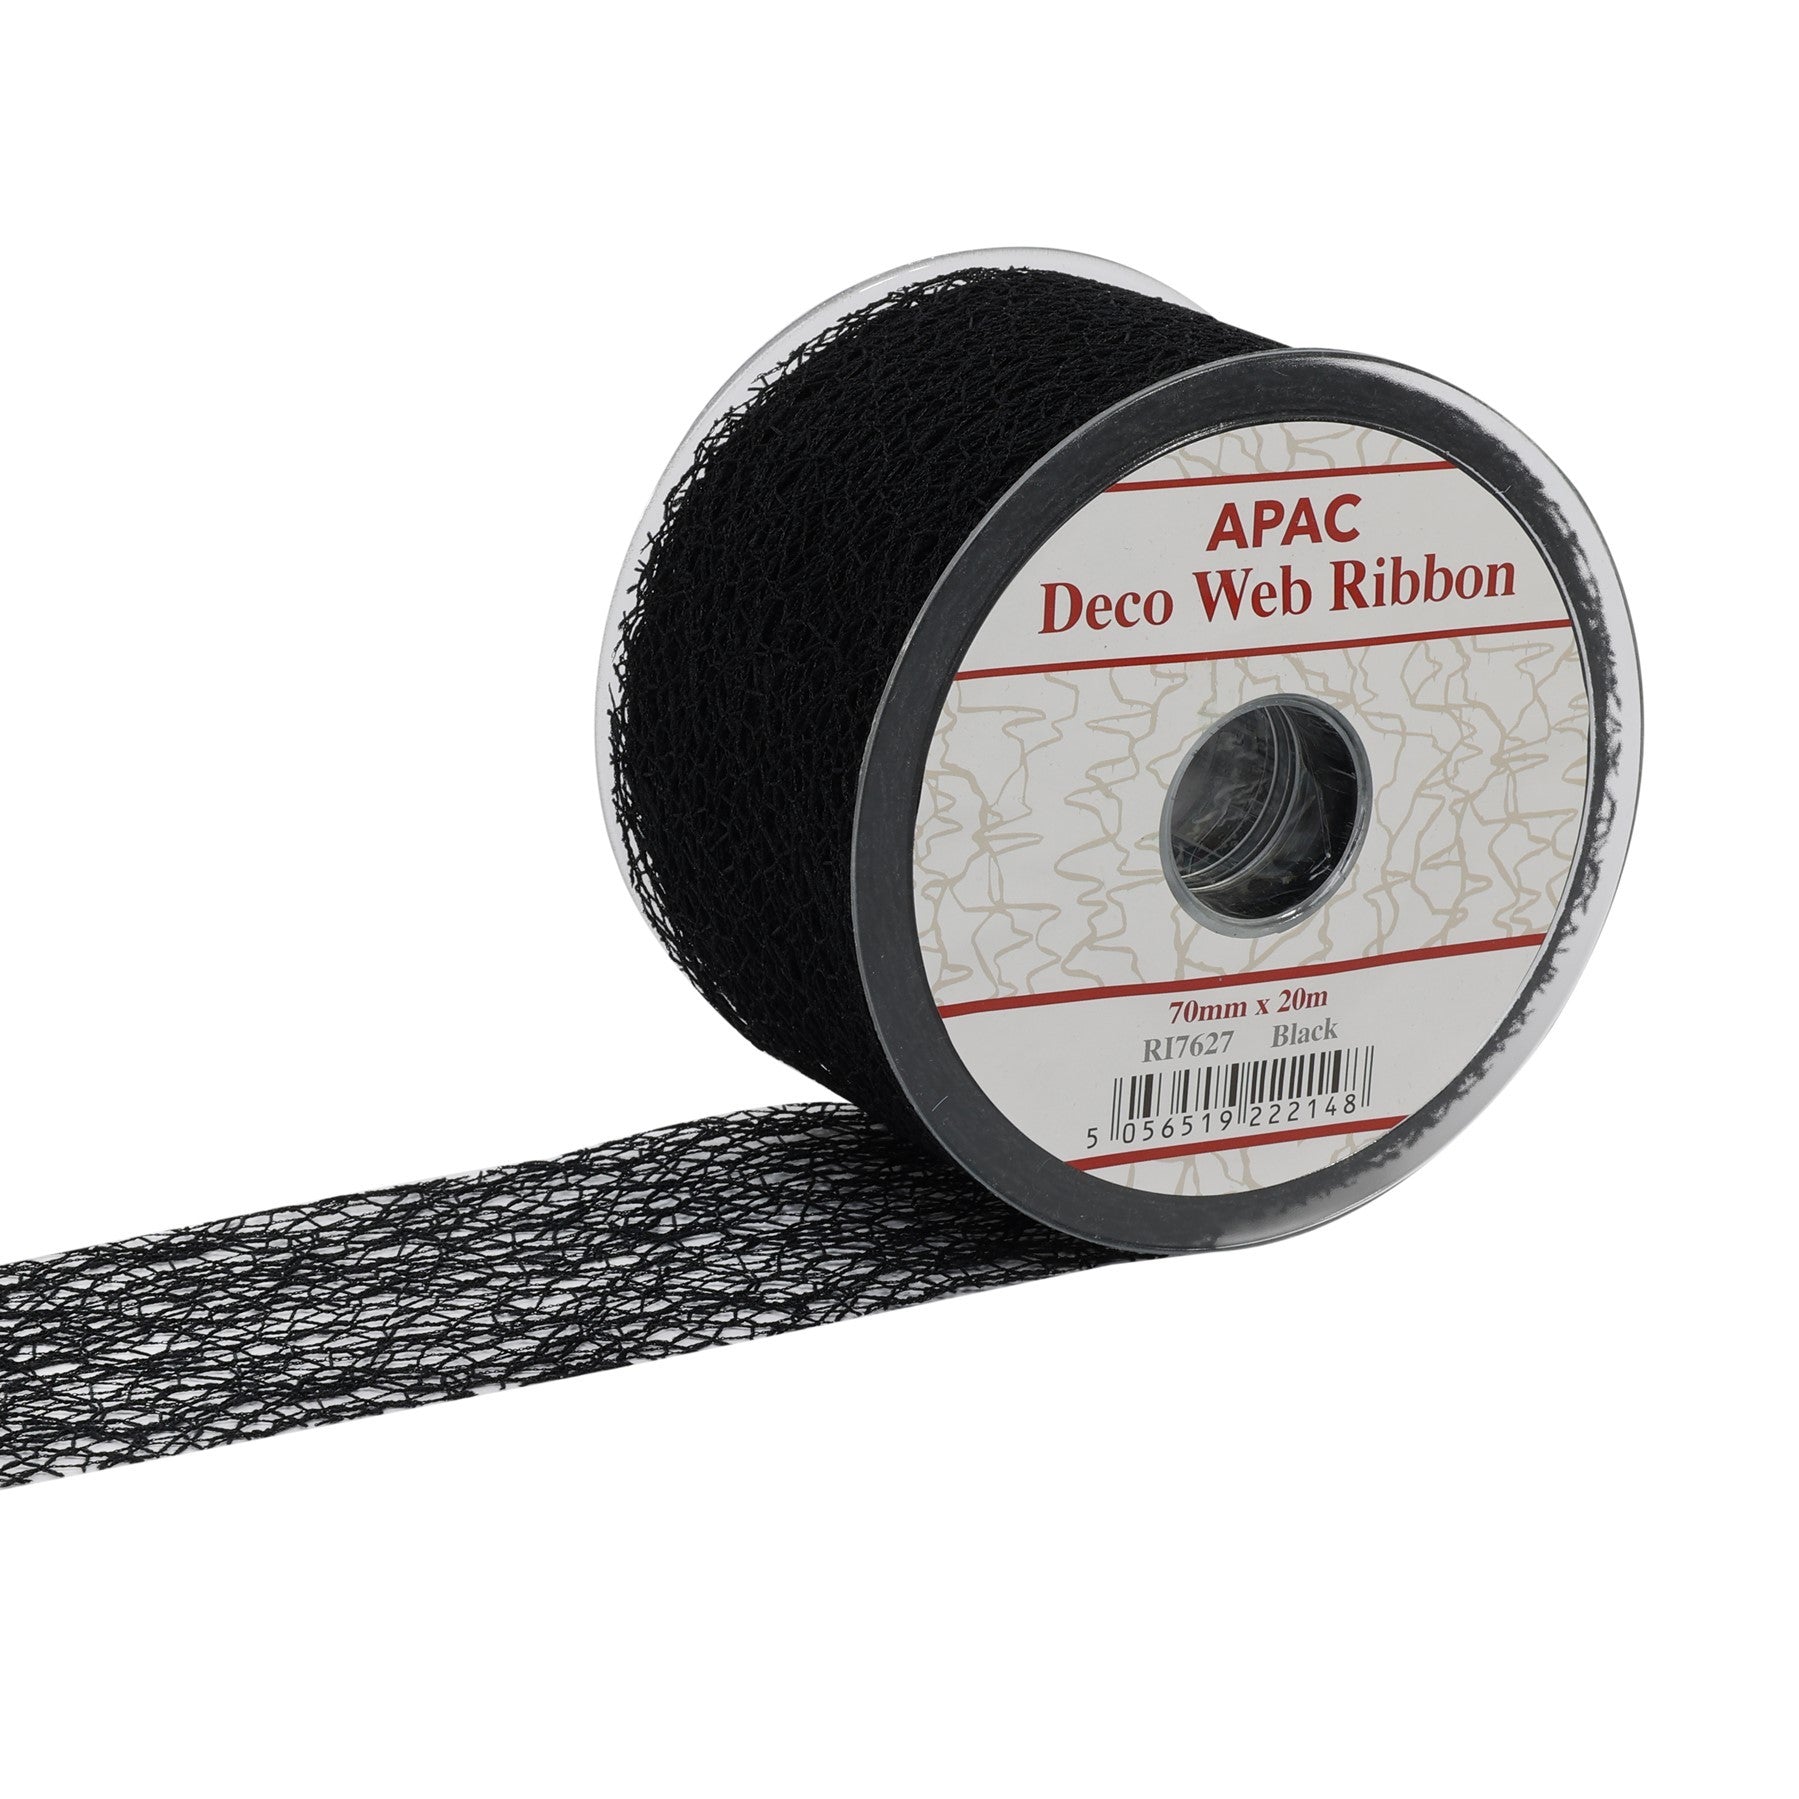 View Black Deco Web Ribbon 70mm x 20m information